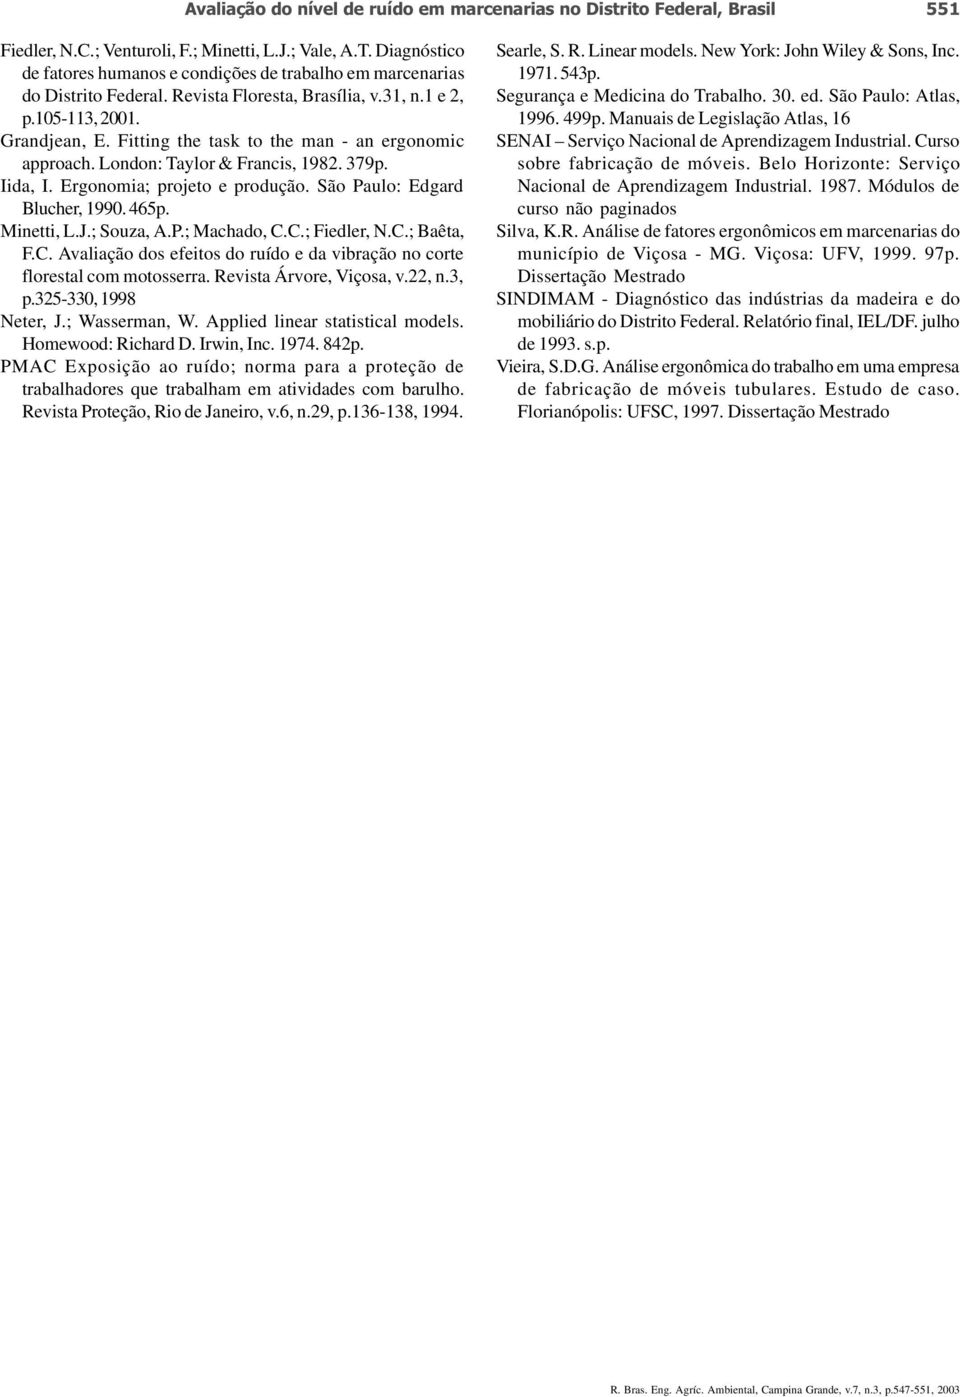 Fitting the task to the man - an ergonomic approach. London: Taylor & Francis, 1982. 379p. Iida, I. Ergonomia; projeto e produção. São Paulo: Edgard Blucher, 1990. 465p. Minetti, L.J.; Souza, A.P.; Machado, C.